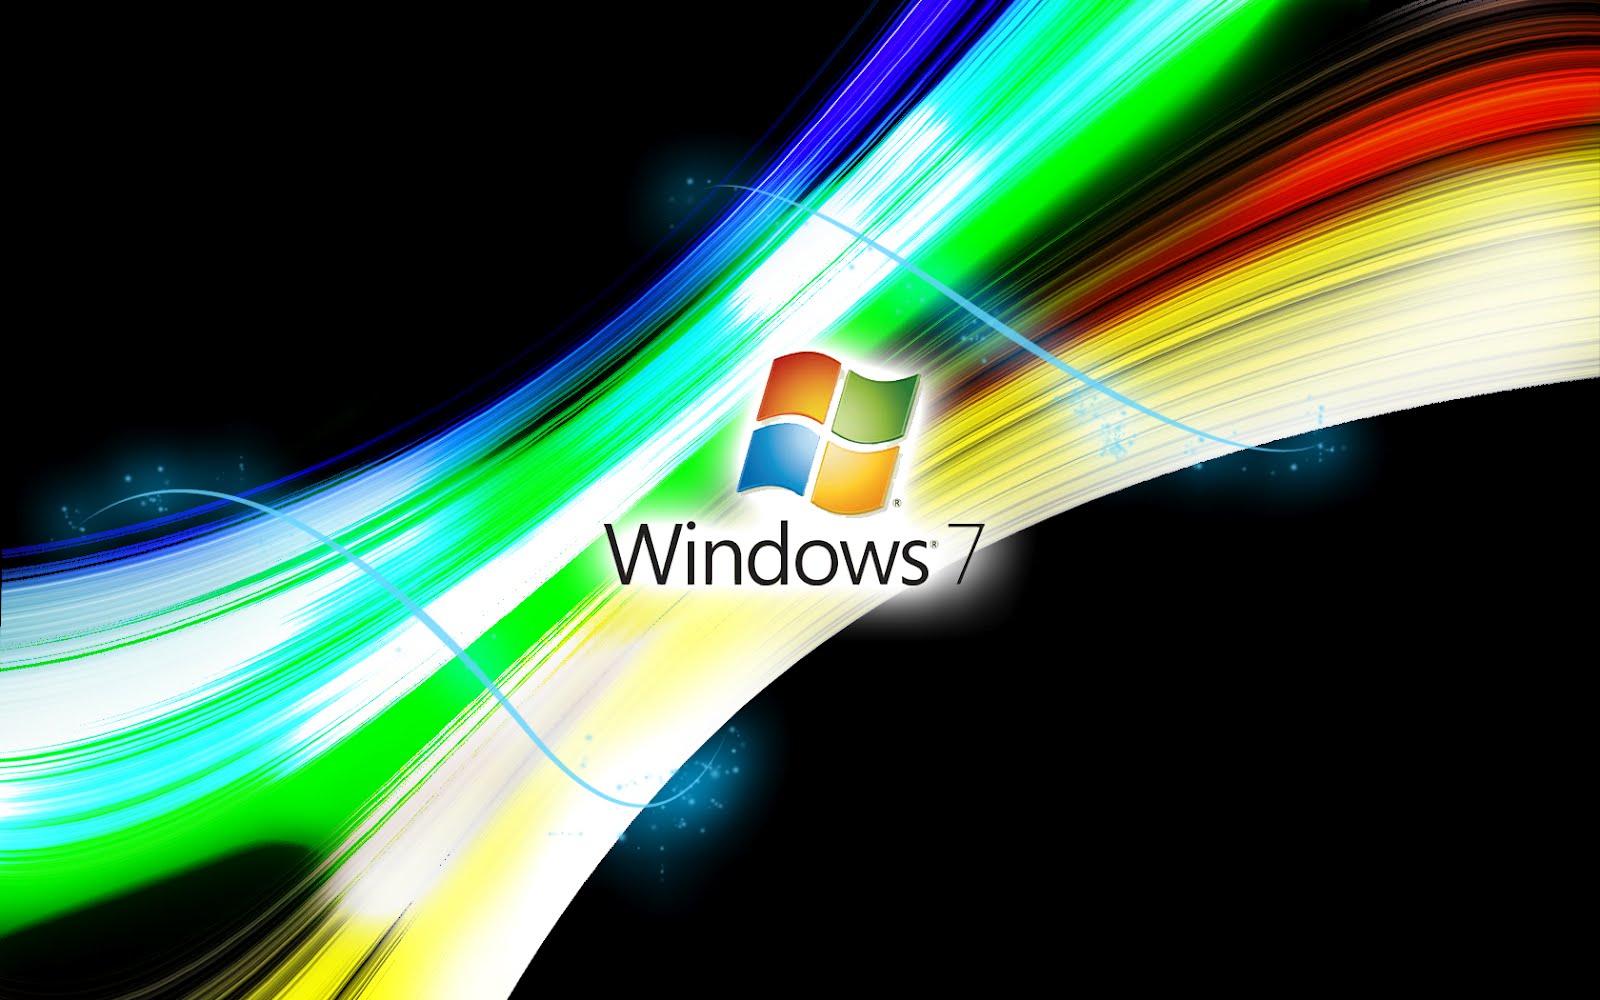 Windows 7 Wallpaper Free:Computer Wallpaper | Free Wallpaper Downloads